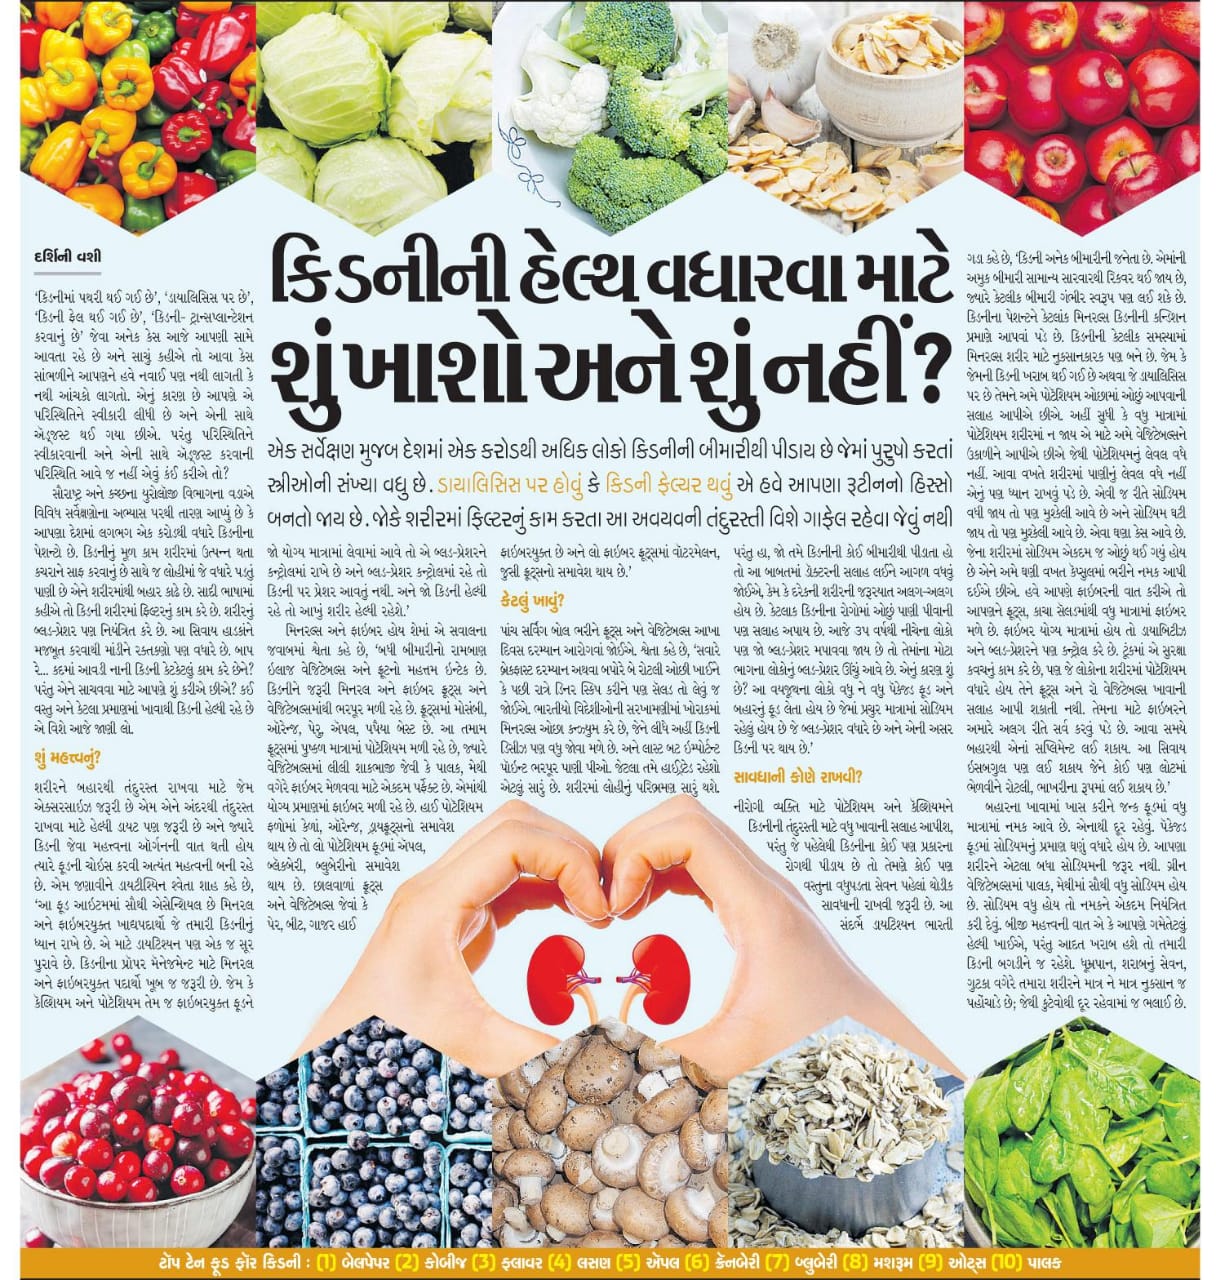 Gujarati Midday - Diet for Kidney Care